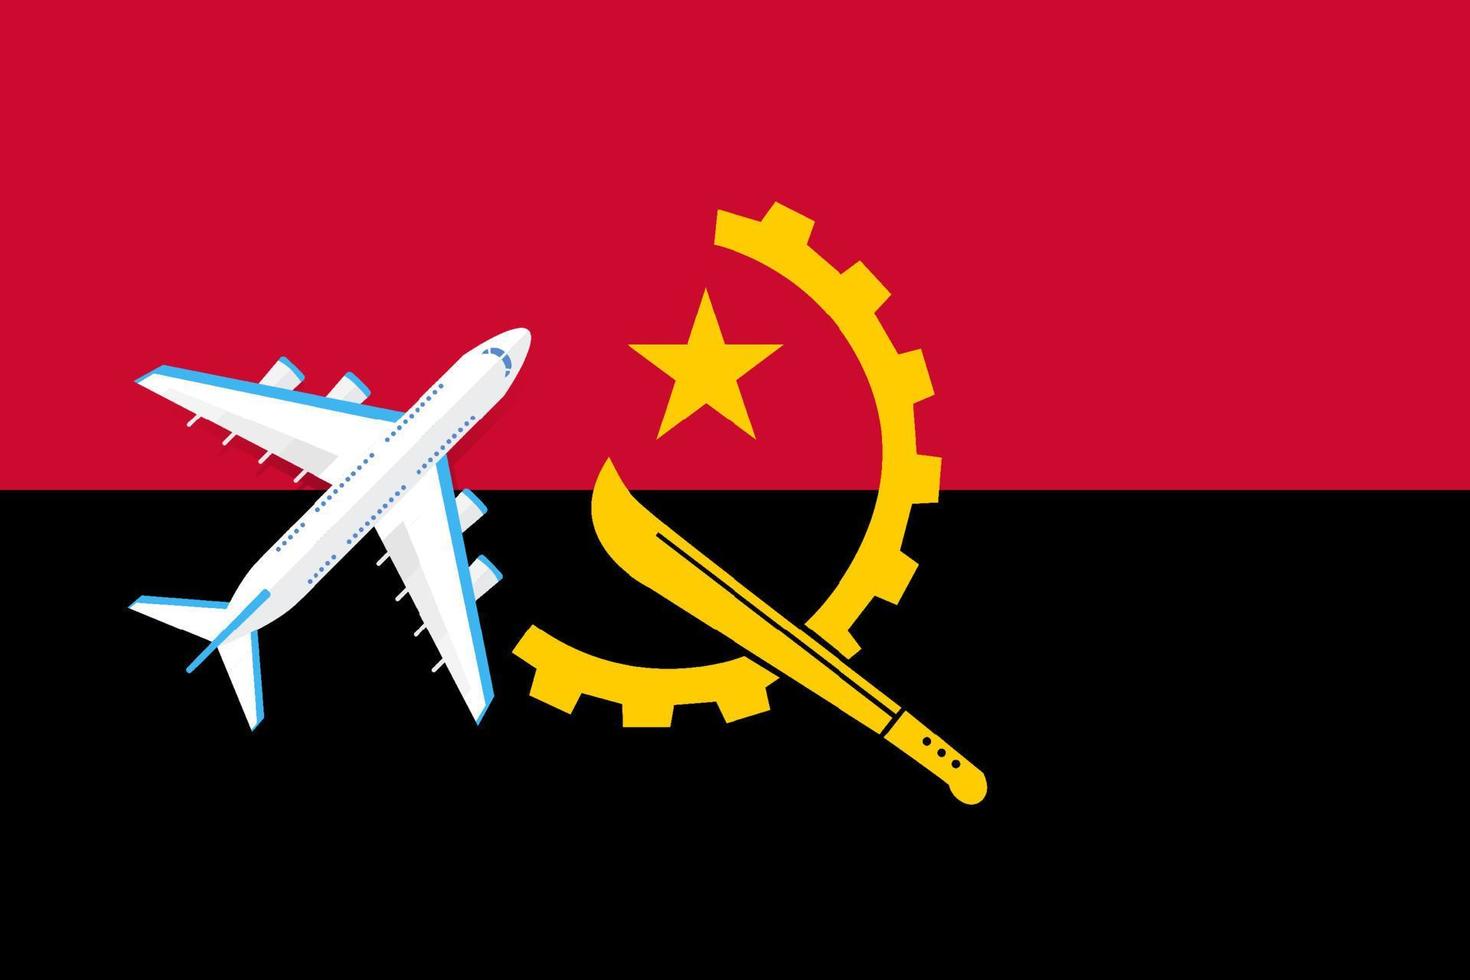 Angola The Travel Destination logo - Vector travel company logo design - Country Flag Travel and Tourism concept t shirt graphics - vector illustration